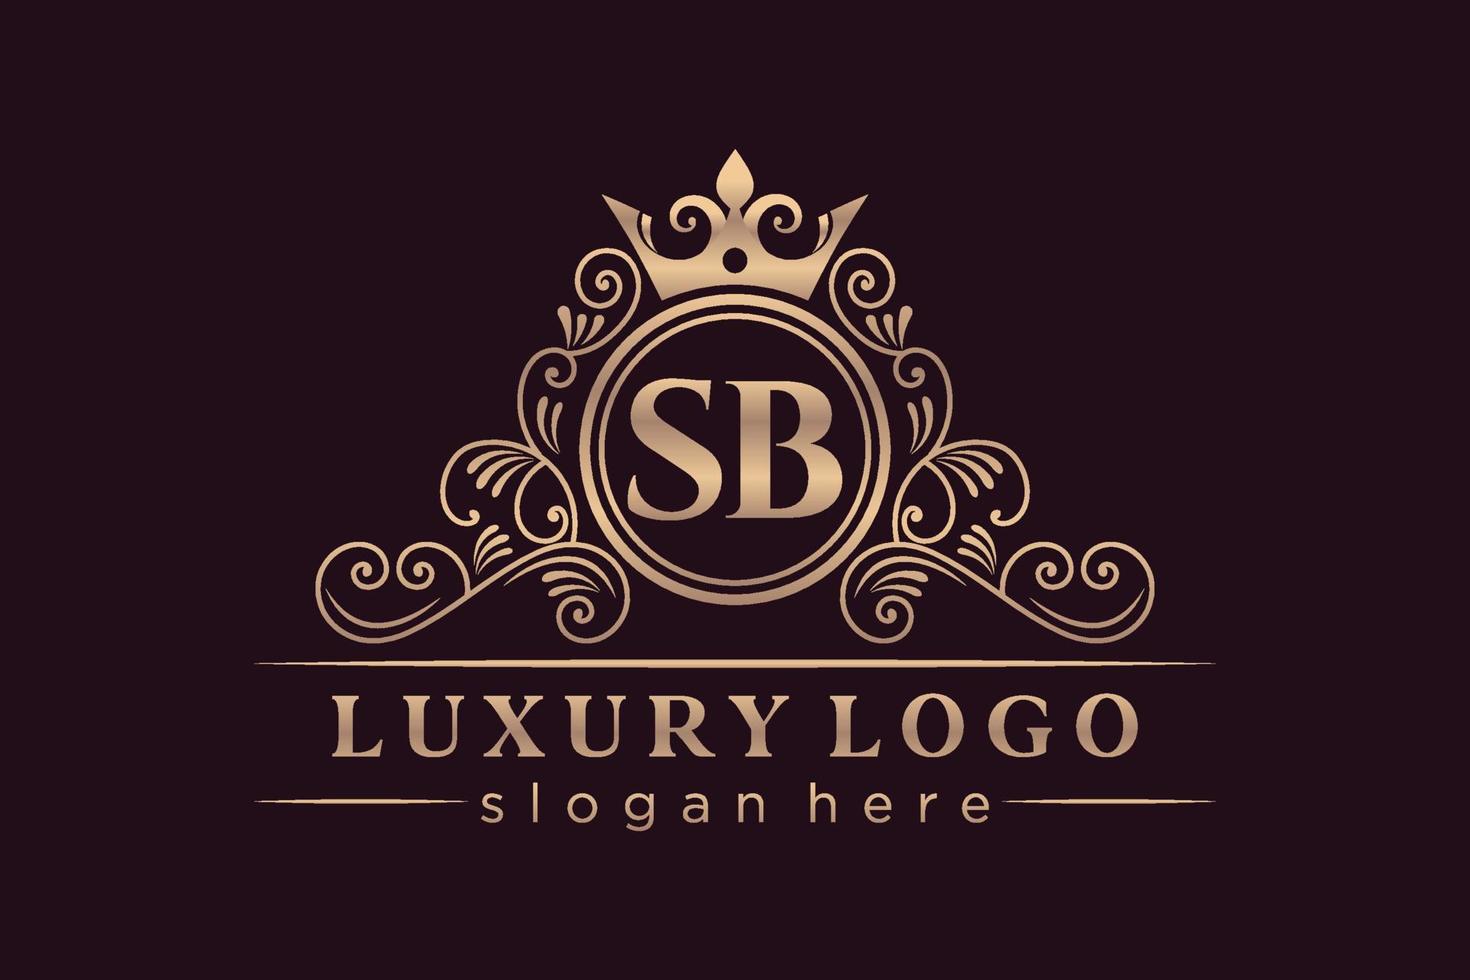 sb letra inicial ouro caligráfico feminino floral mão desenhada monograma heráldico antigo estilo vintage luxo design de logotipo vetor premium